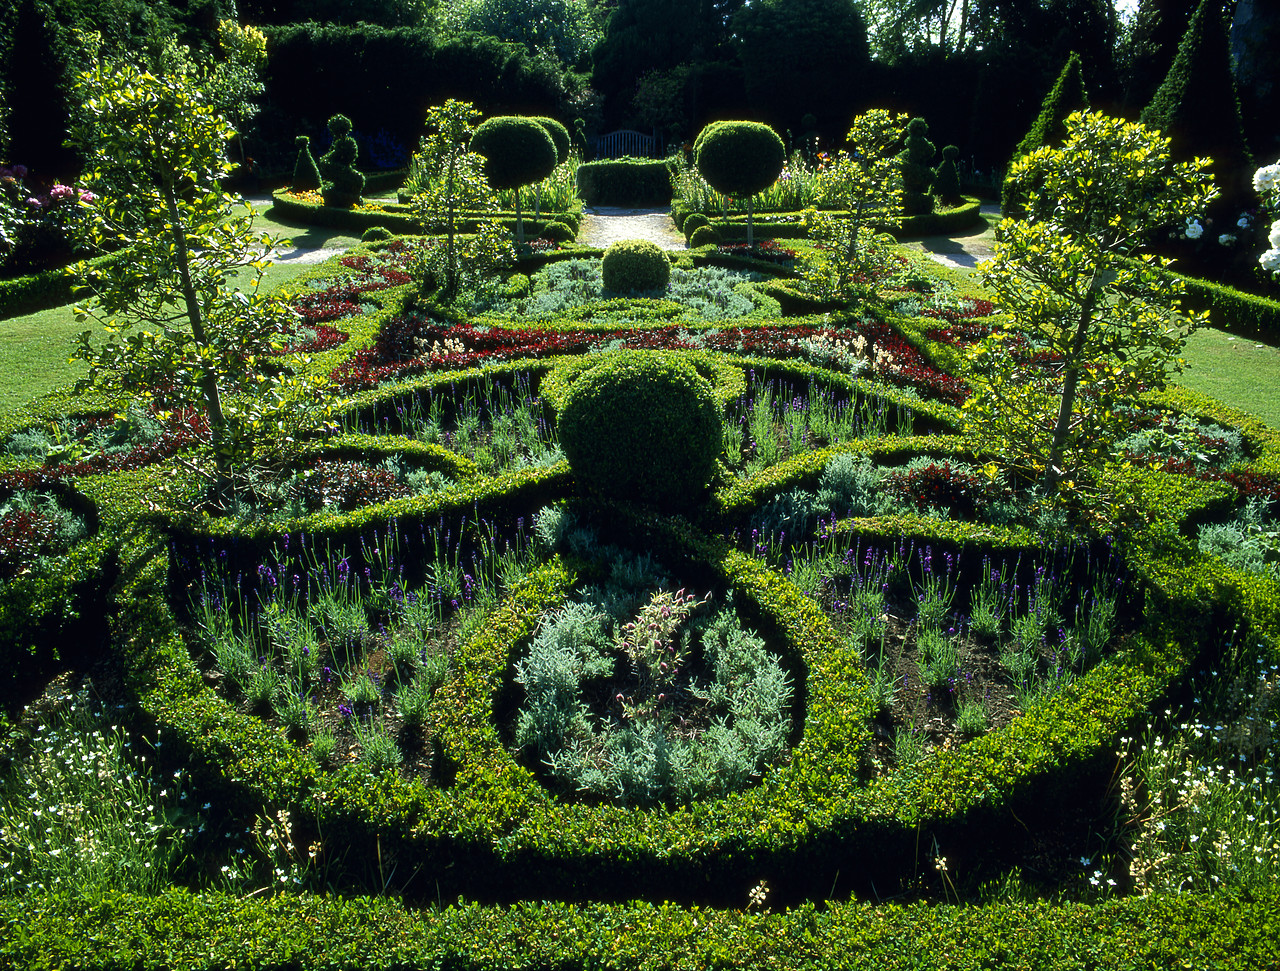 #030216-2 - Abbey Gardens, Malmesbury, Wiltshire, England